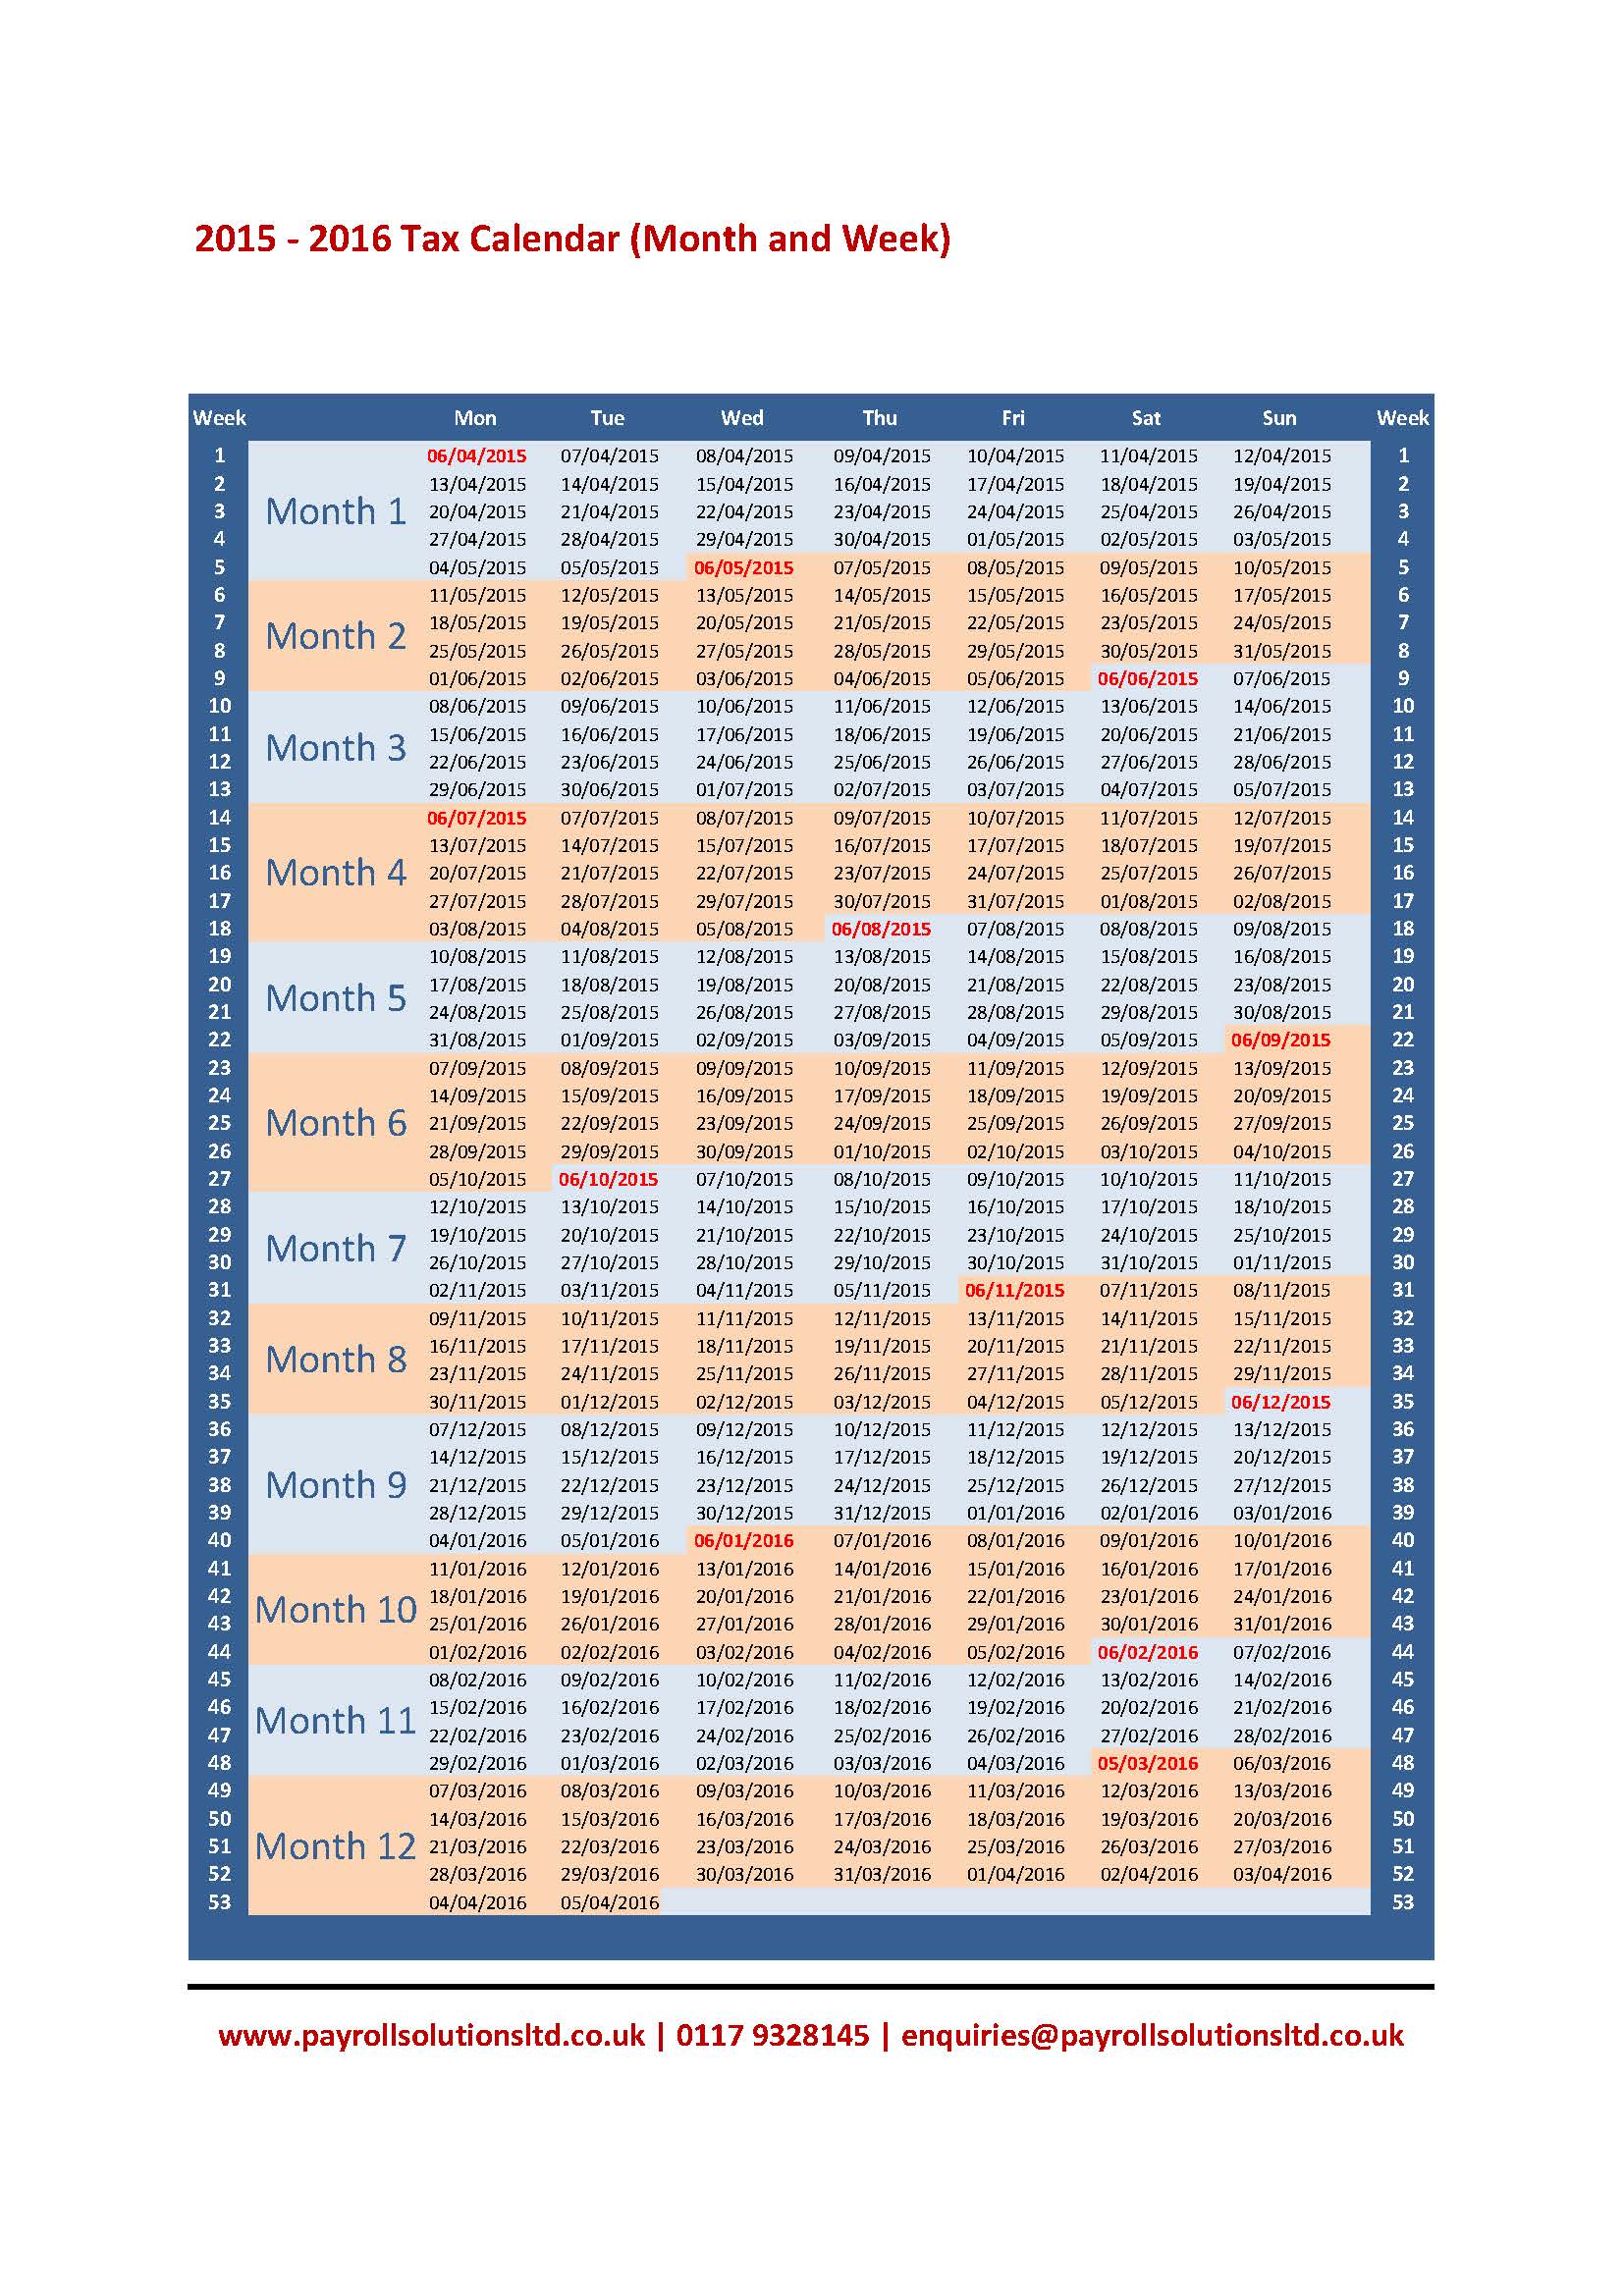 Tax Week and Month calendar 2015-2016